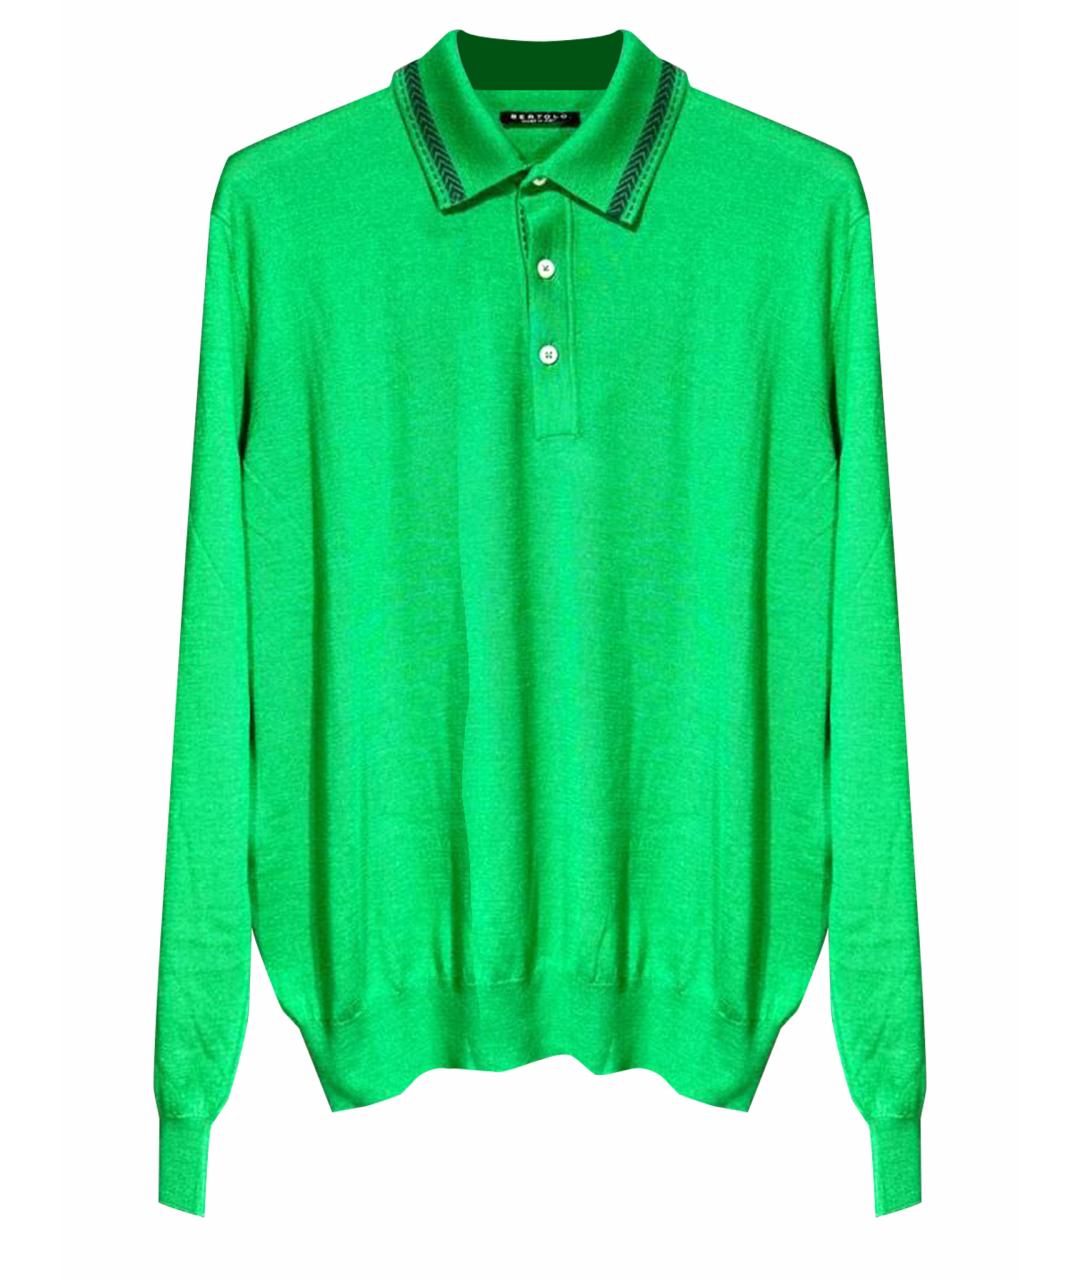 BERTOLO LUXURY MENSWEAR Зеленый джемпер / свитер, фото 1